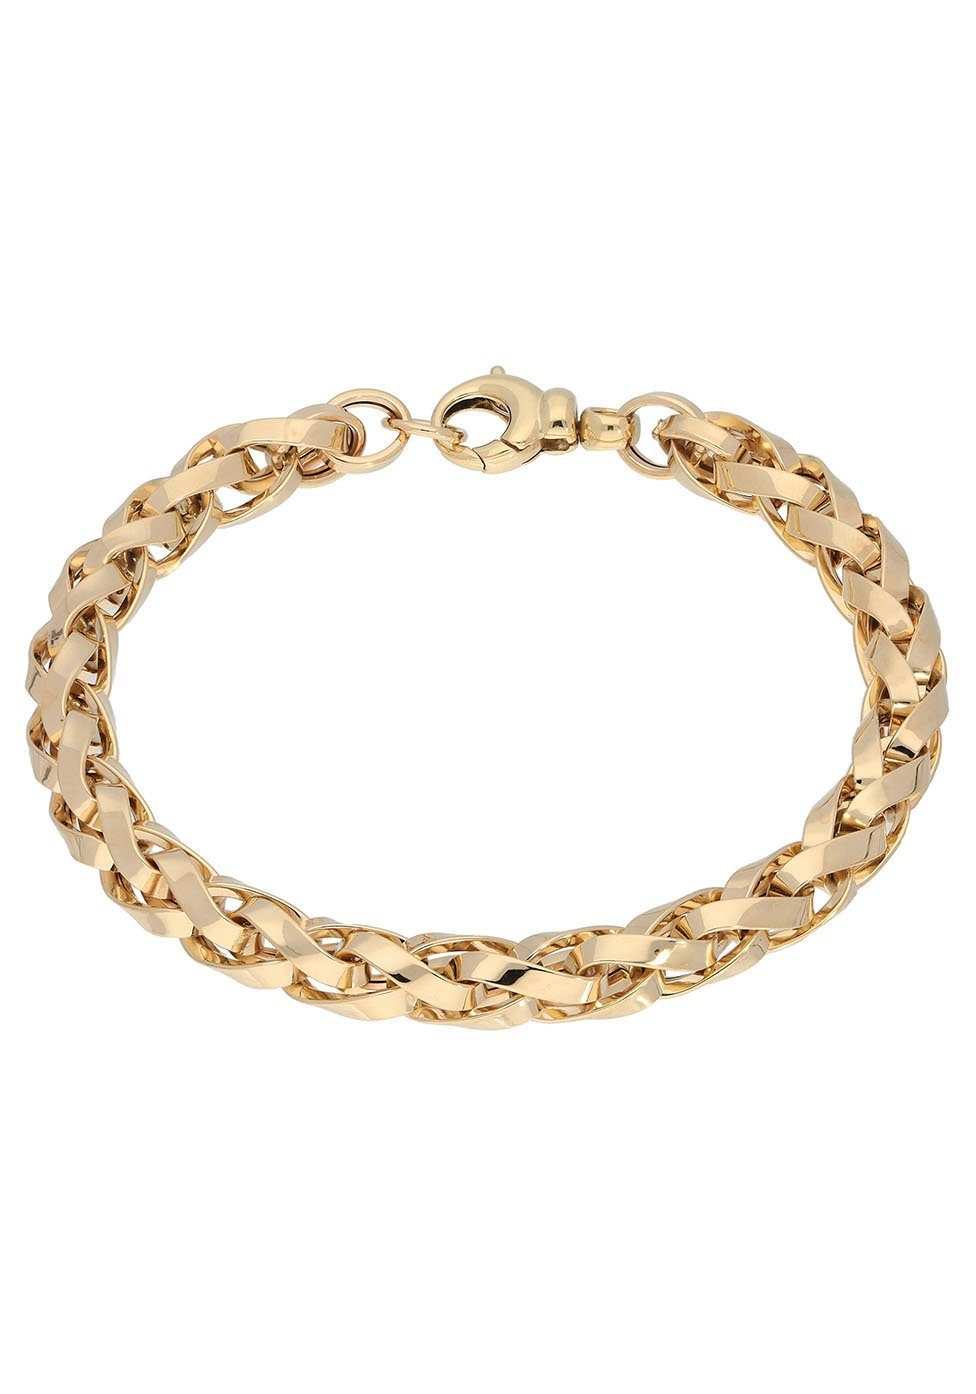 Firetti Armkette Schmuck Geschenk Gold 585 Armschmuck Armband Goldarmband Zopfkette, zu Kleid, Shirt, Jeans, Sneaker! Anlass Geburtstag Weihnachten